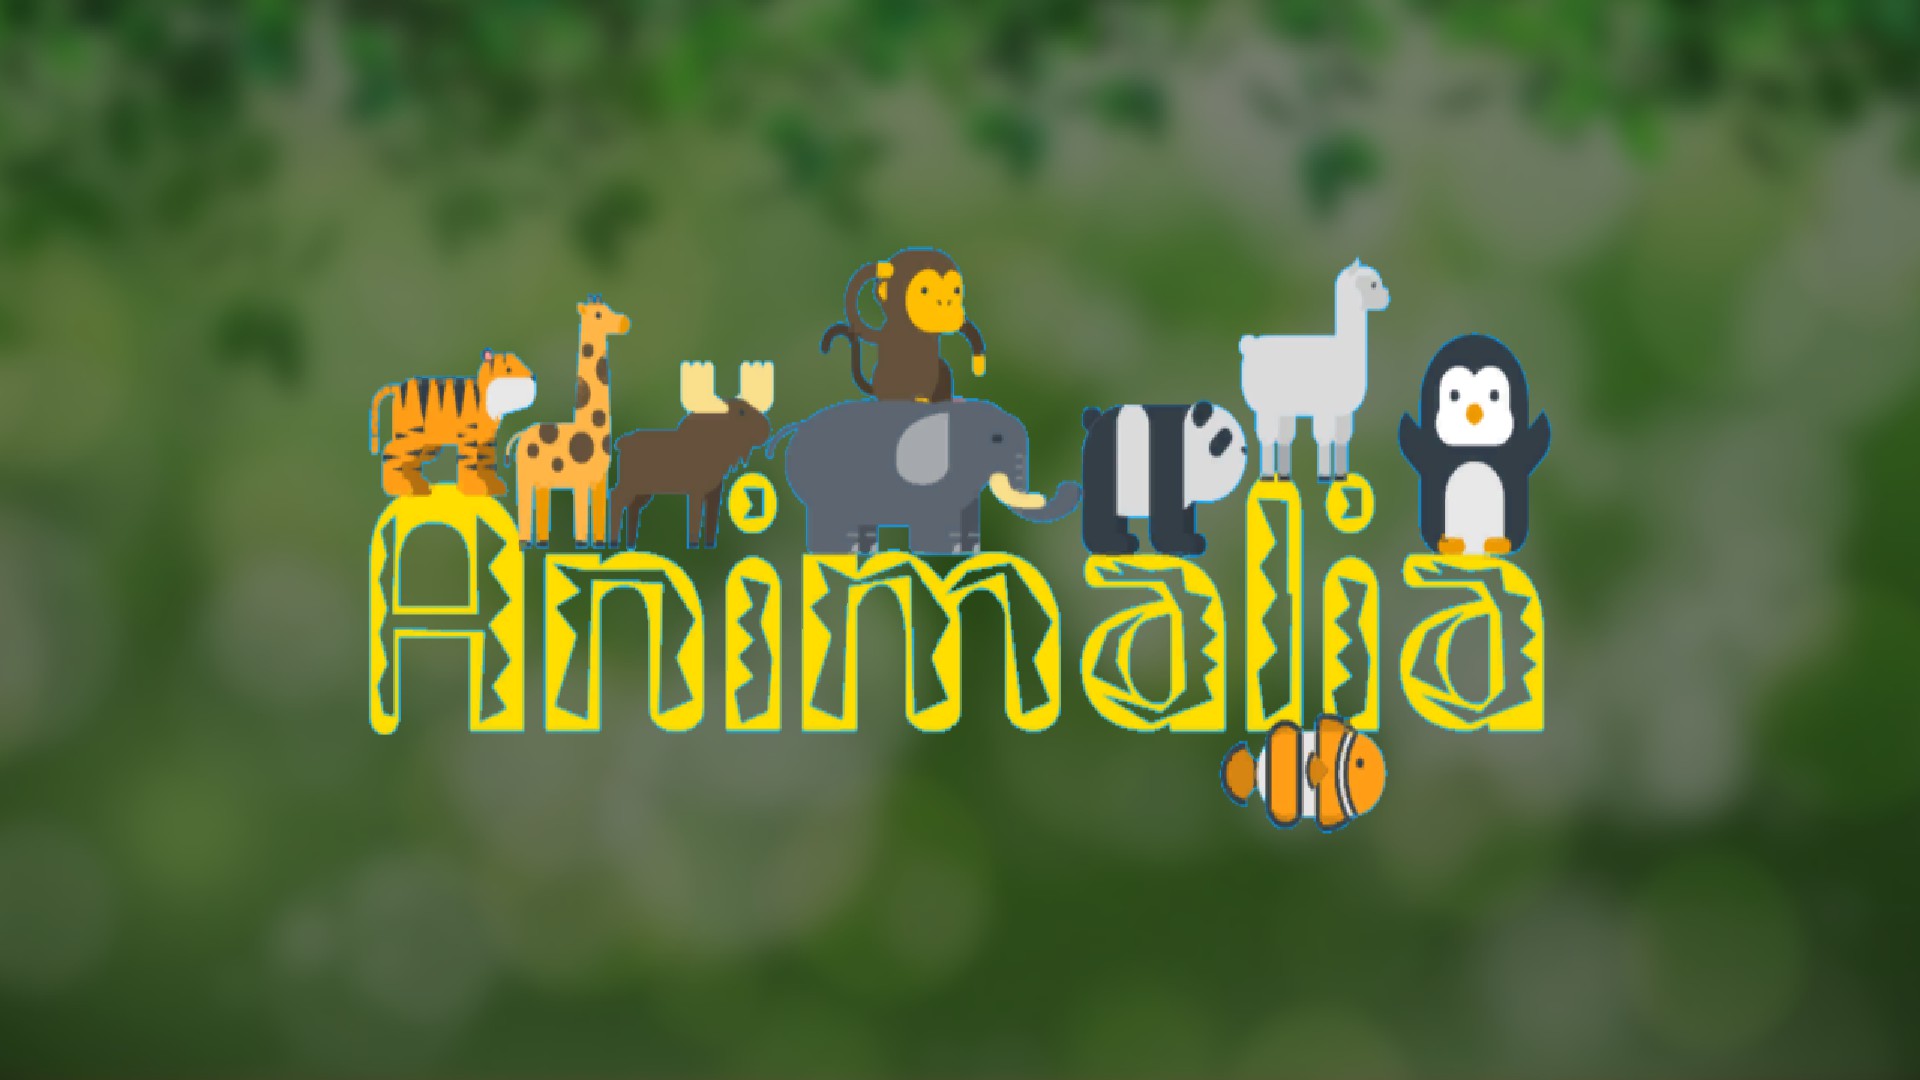 Animalia - The Quiz Game screenshot